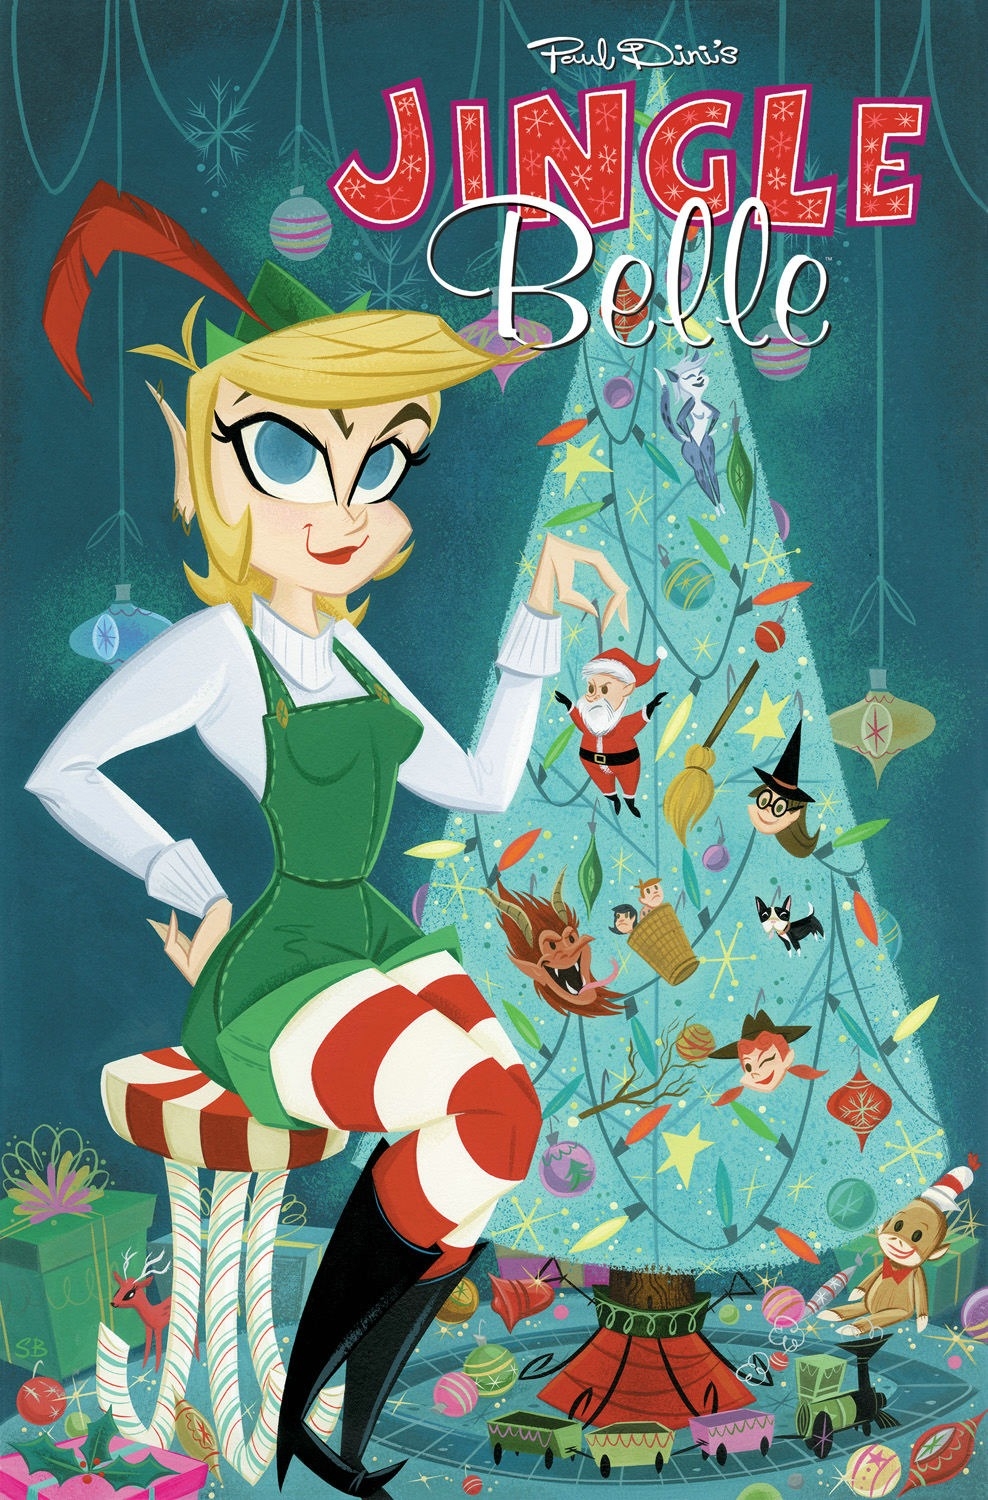 Jingle Belle The Whole Package! by Paul Dini - Penguin Books Australia